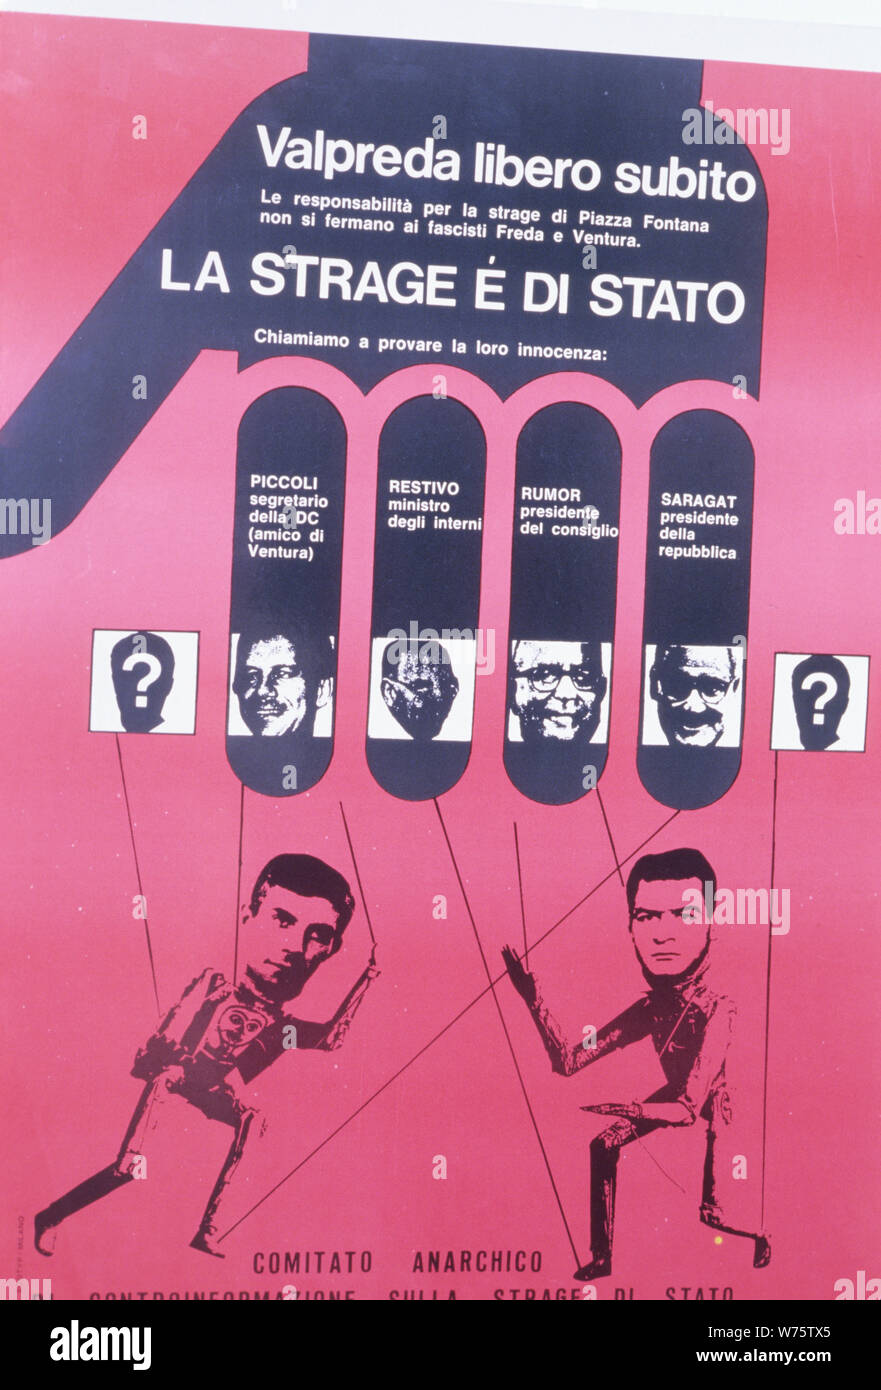 Valpreda free immediately, the massacre of State, anarchist manifesto Stock Photo